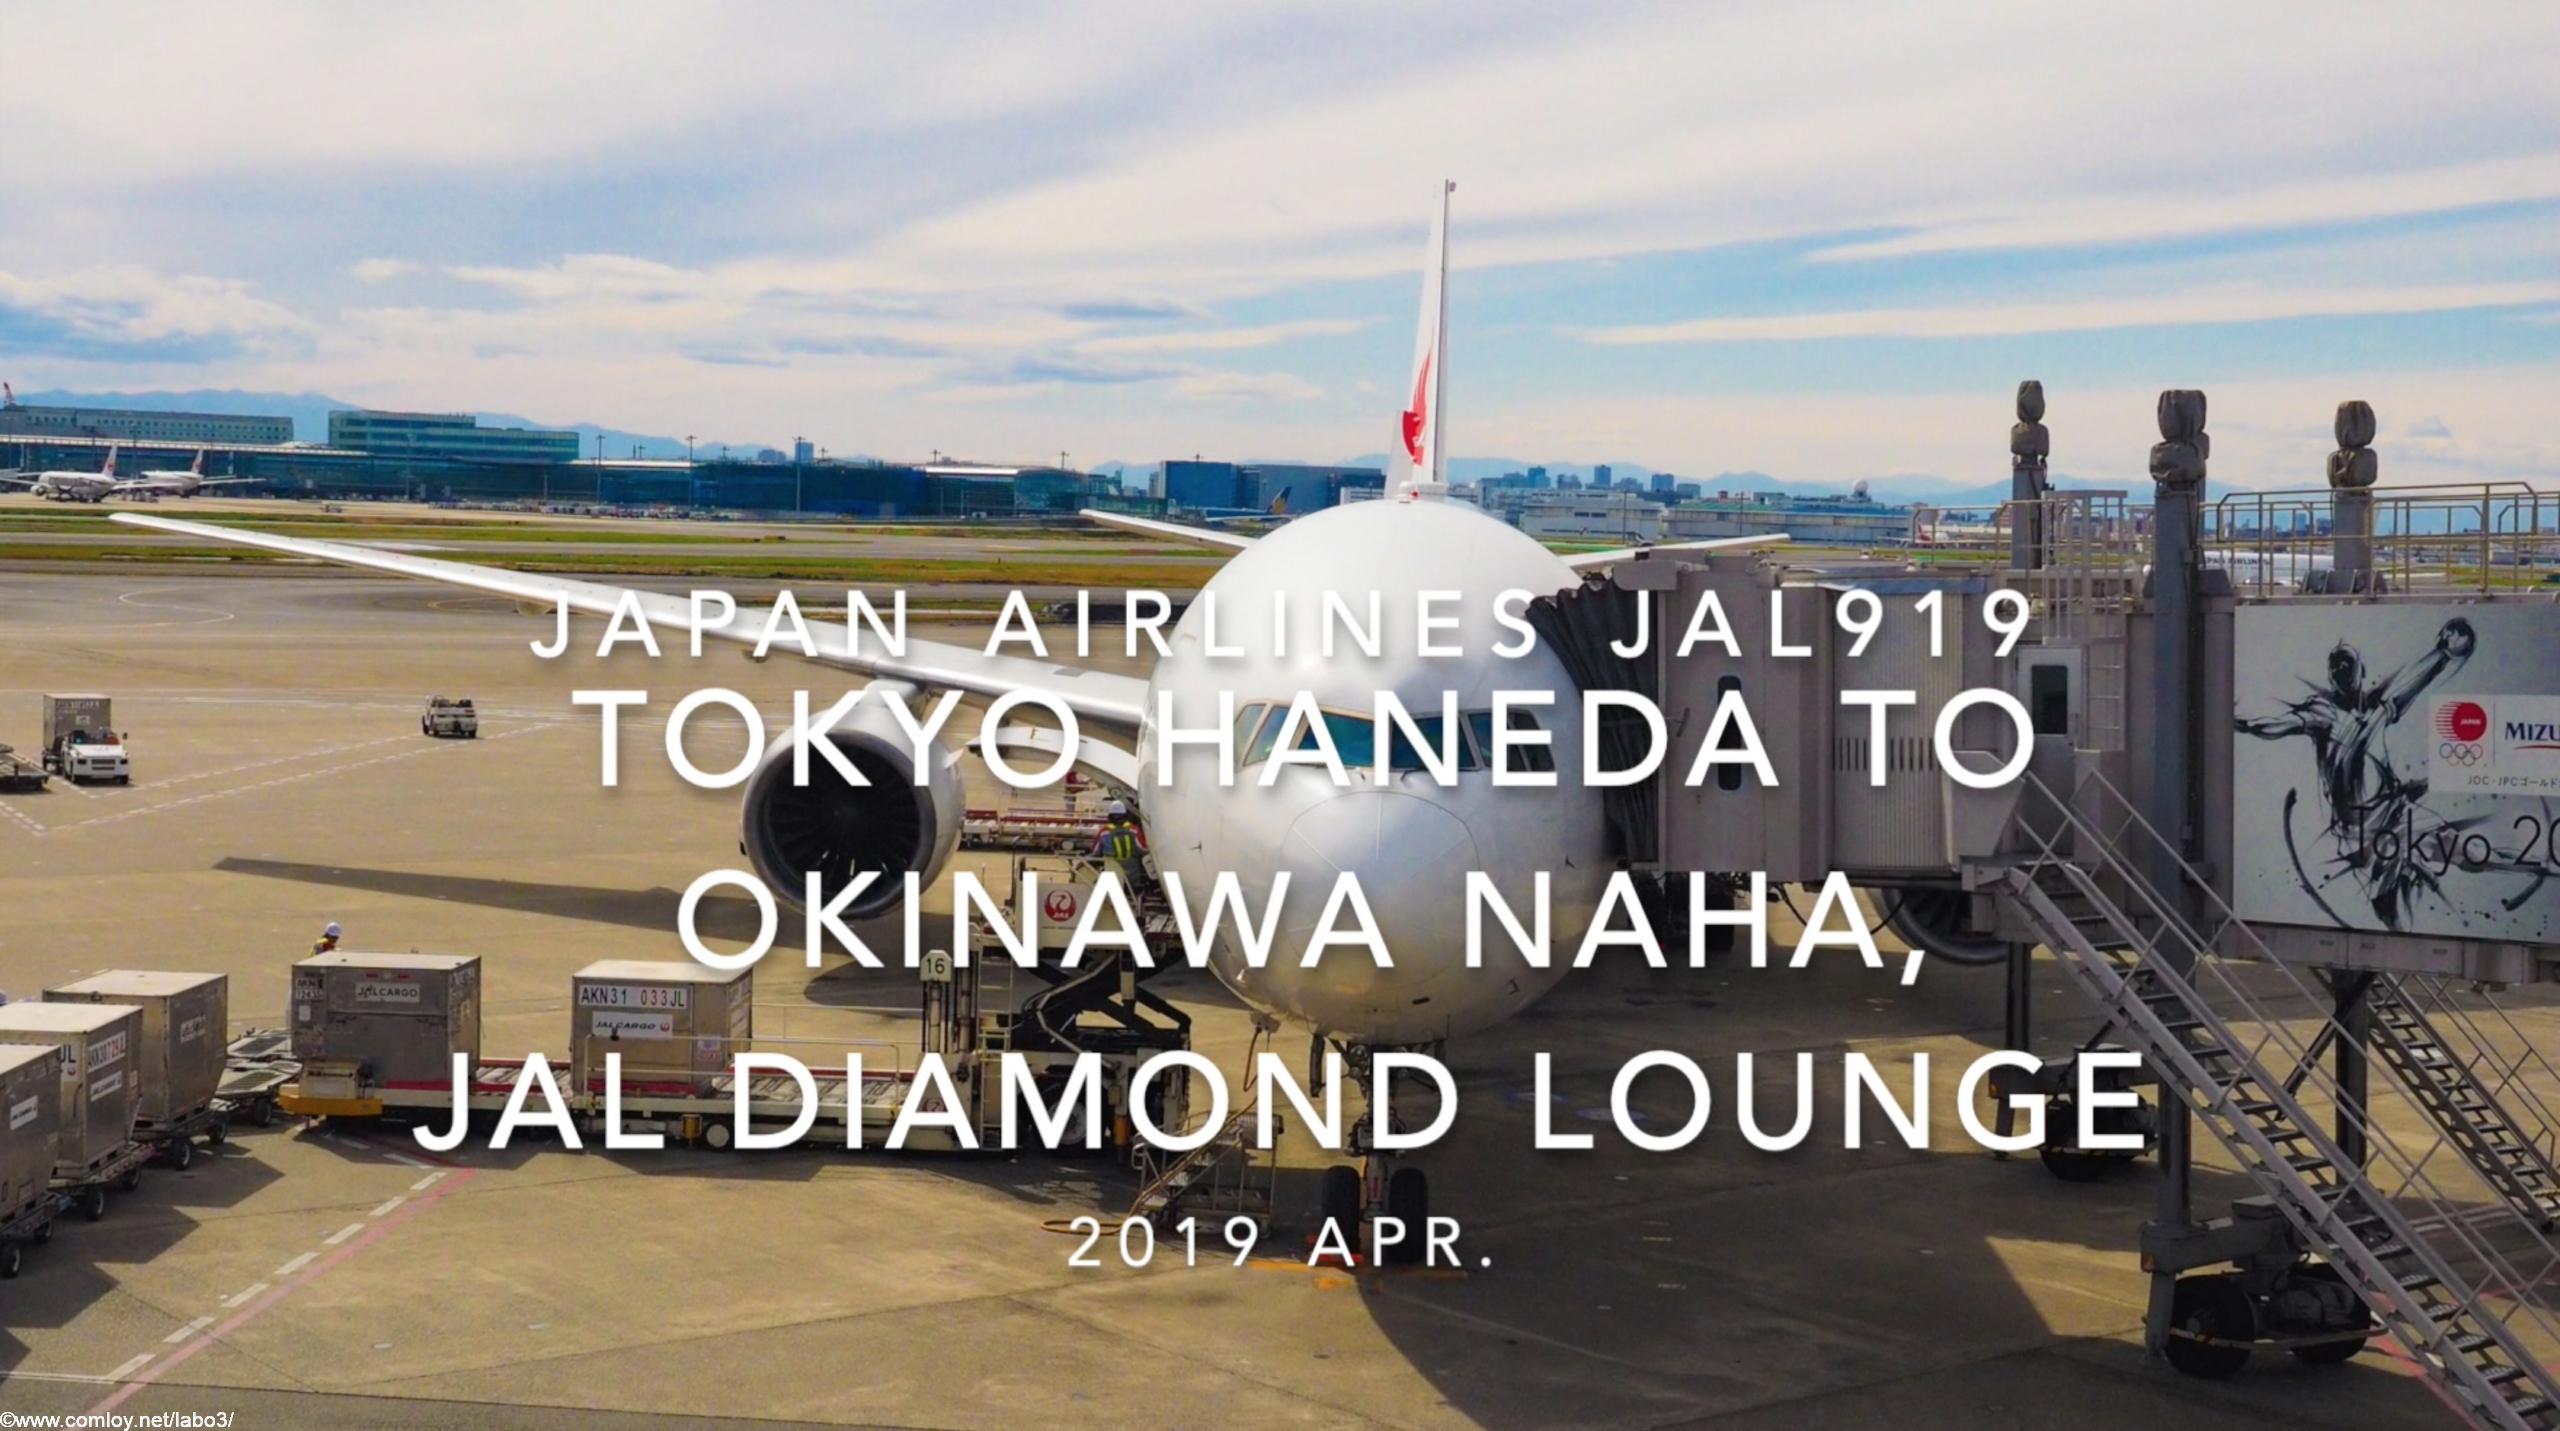 【Flight Report】2019 Apr Japan airlines JAL919 TOKYO HANEDA TO OKINAWA NAHA and JAL DIAMOND LOUNGE 日本航空 羽田 - 那覇 搭乗記